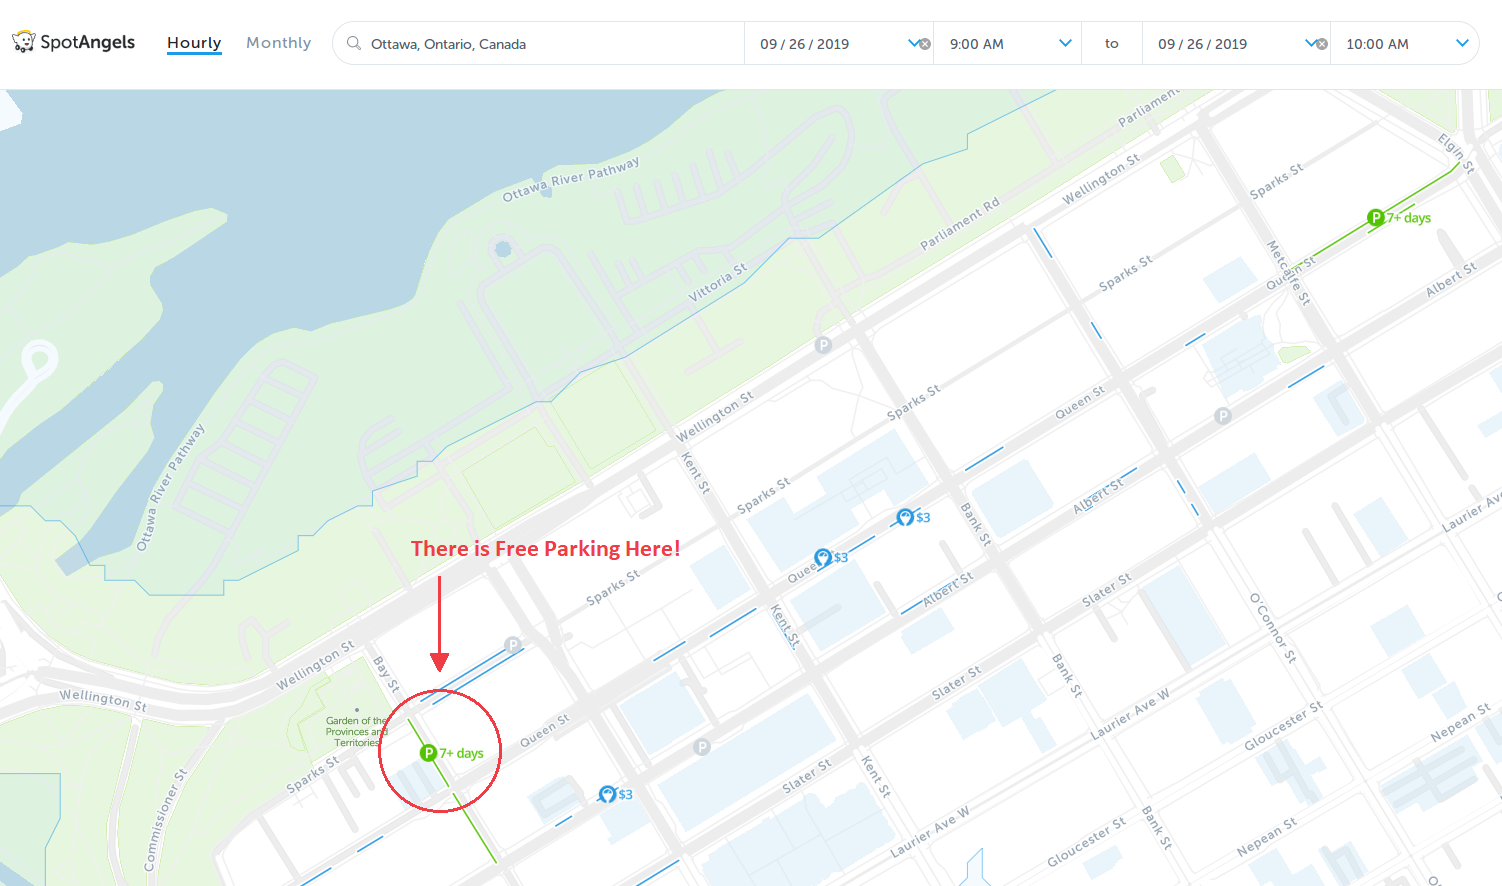 map of free parking in Ottawa - SpotAngels